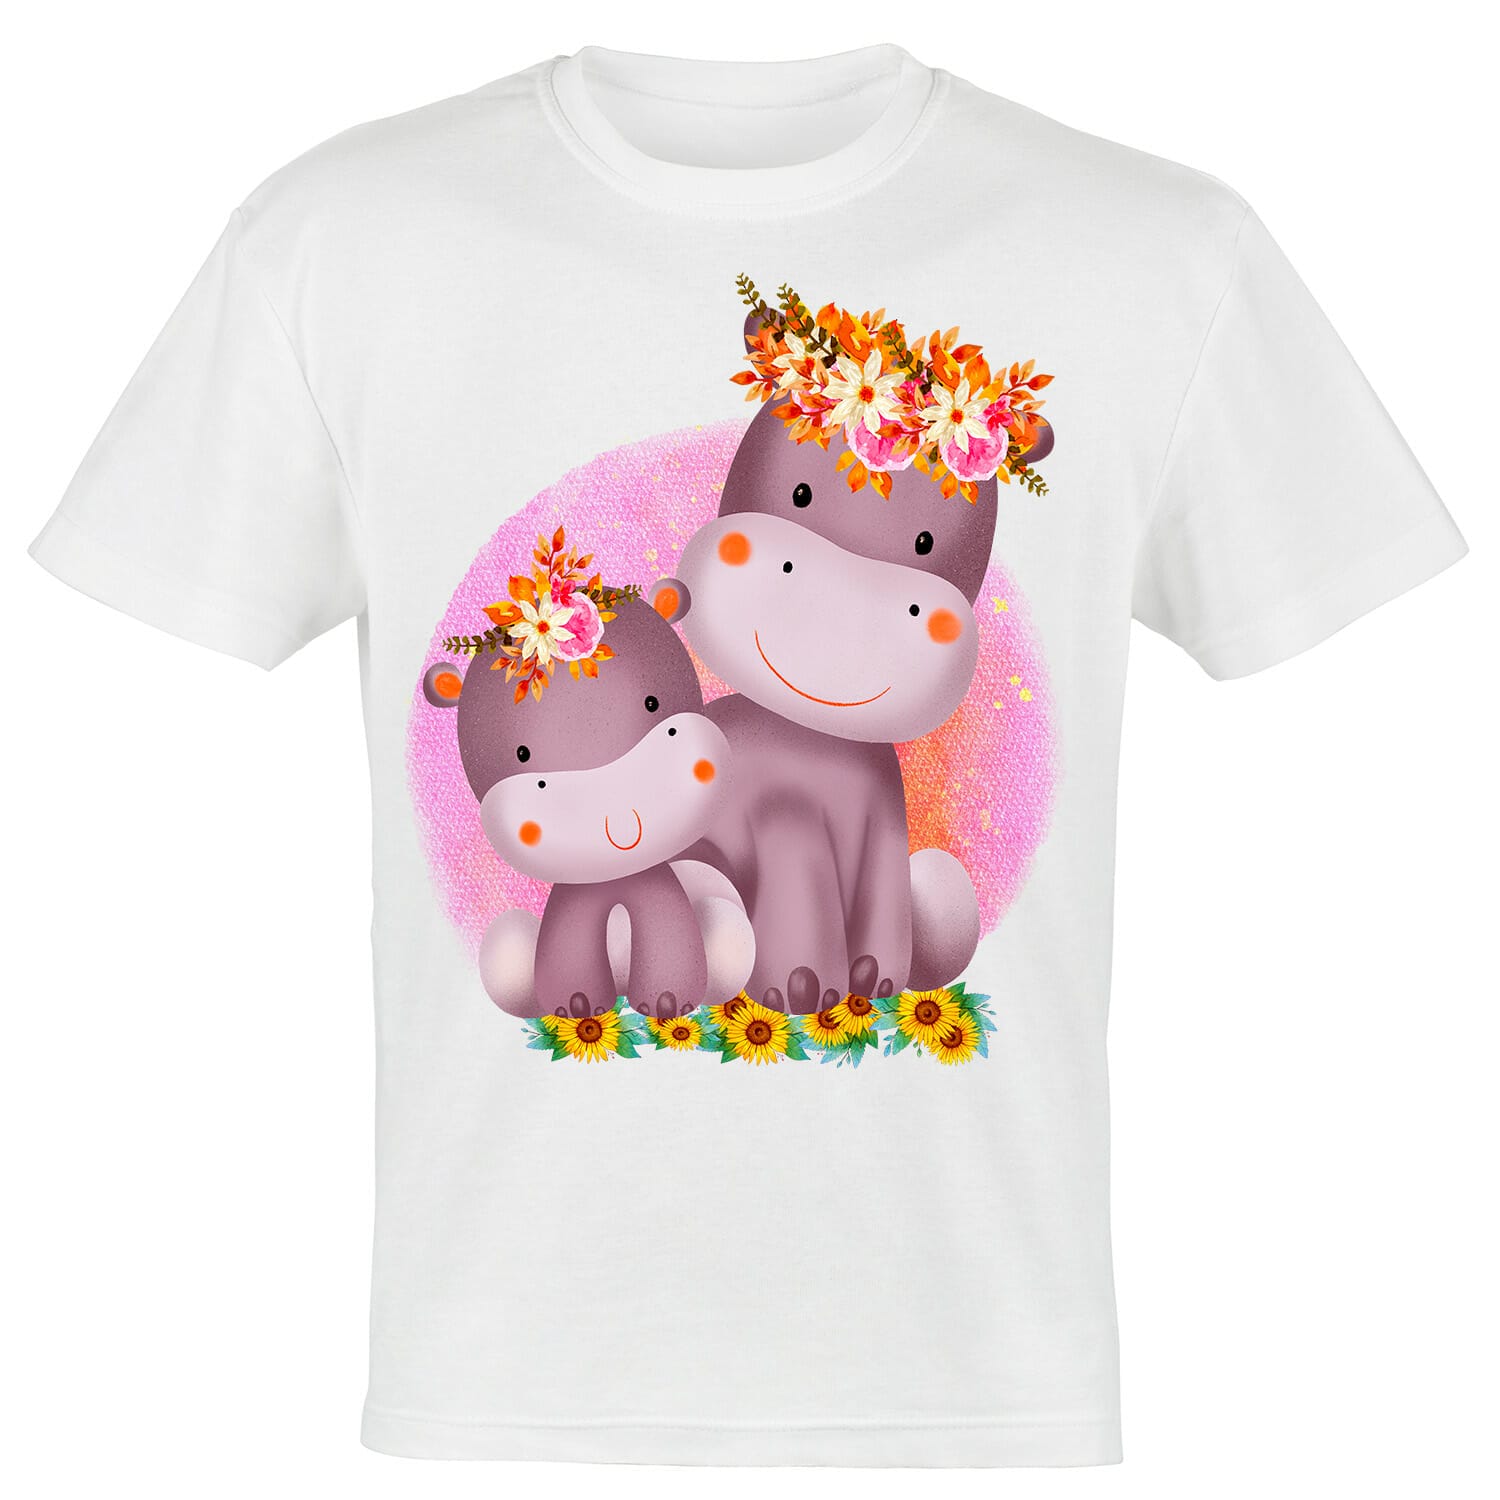 mom and baby hippo tshirt design